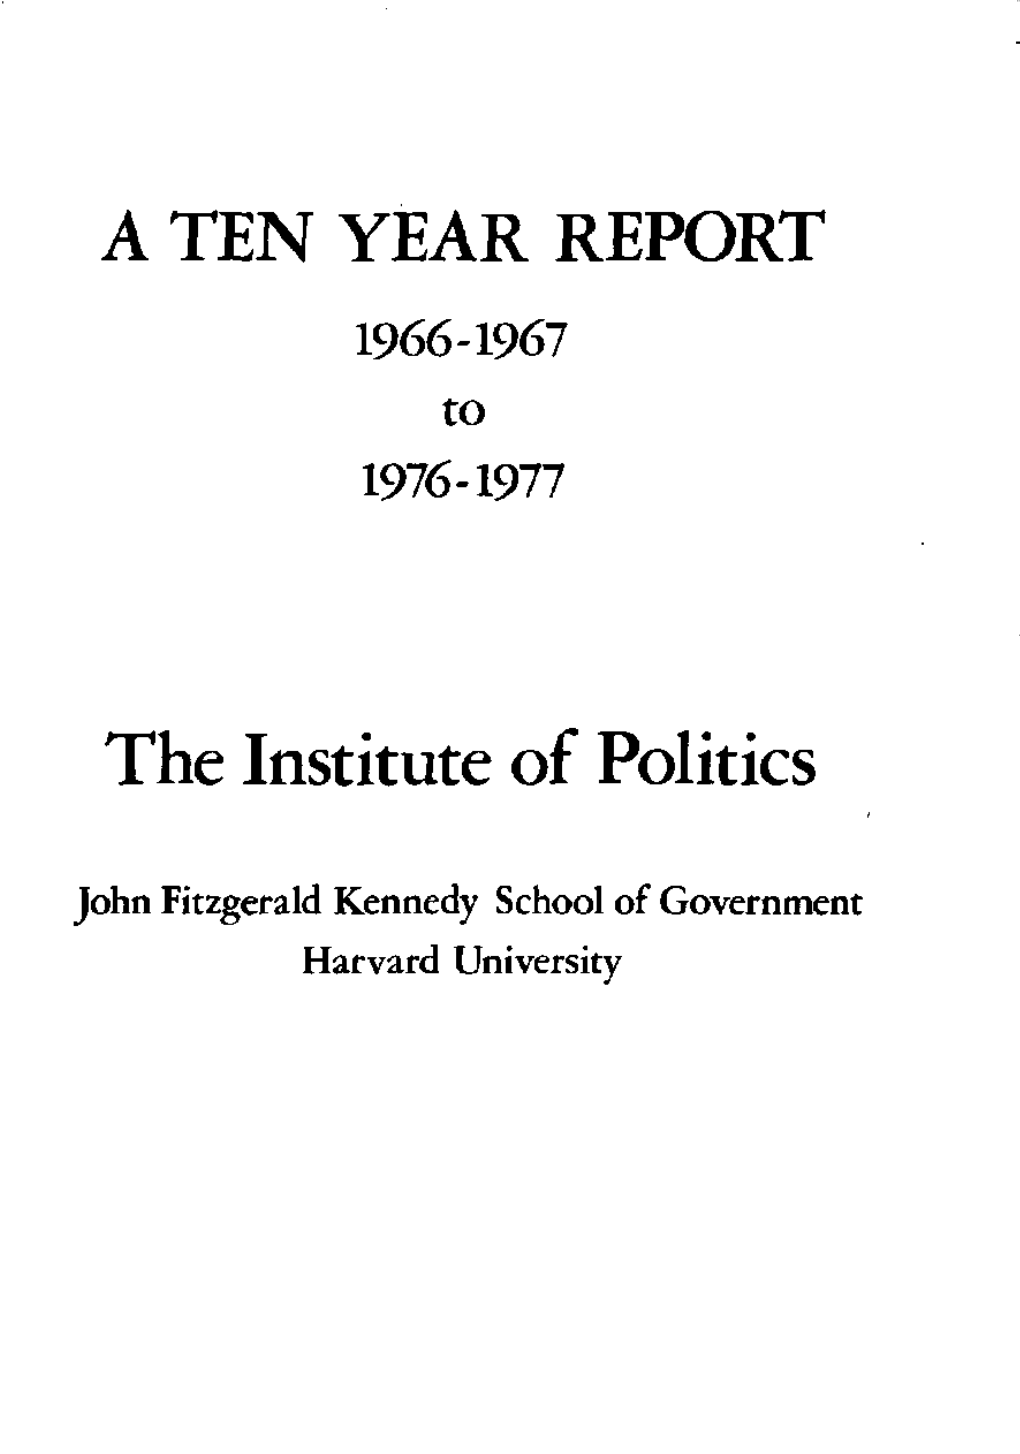 A TEN YEAR REPORT the Institute of Politics